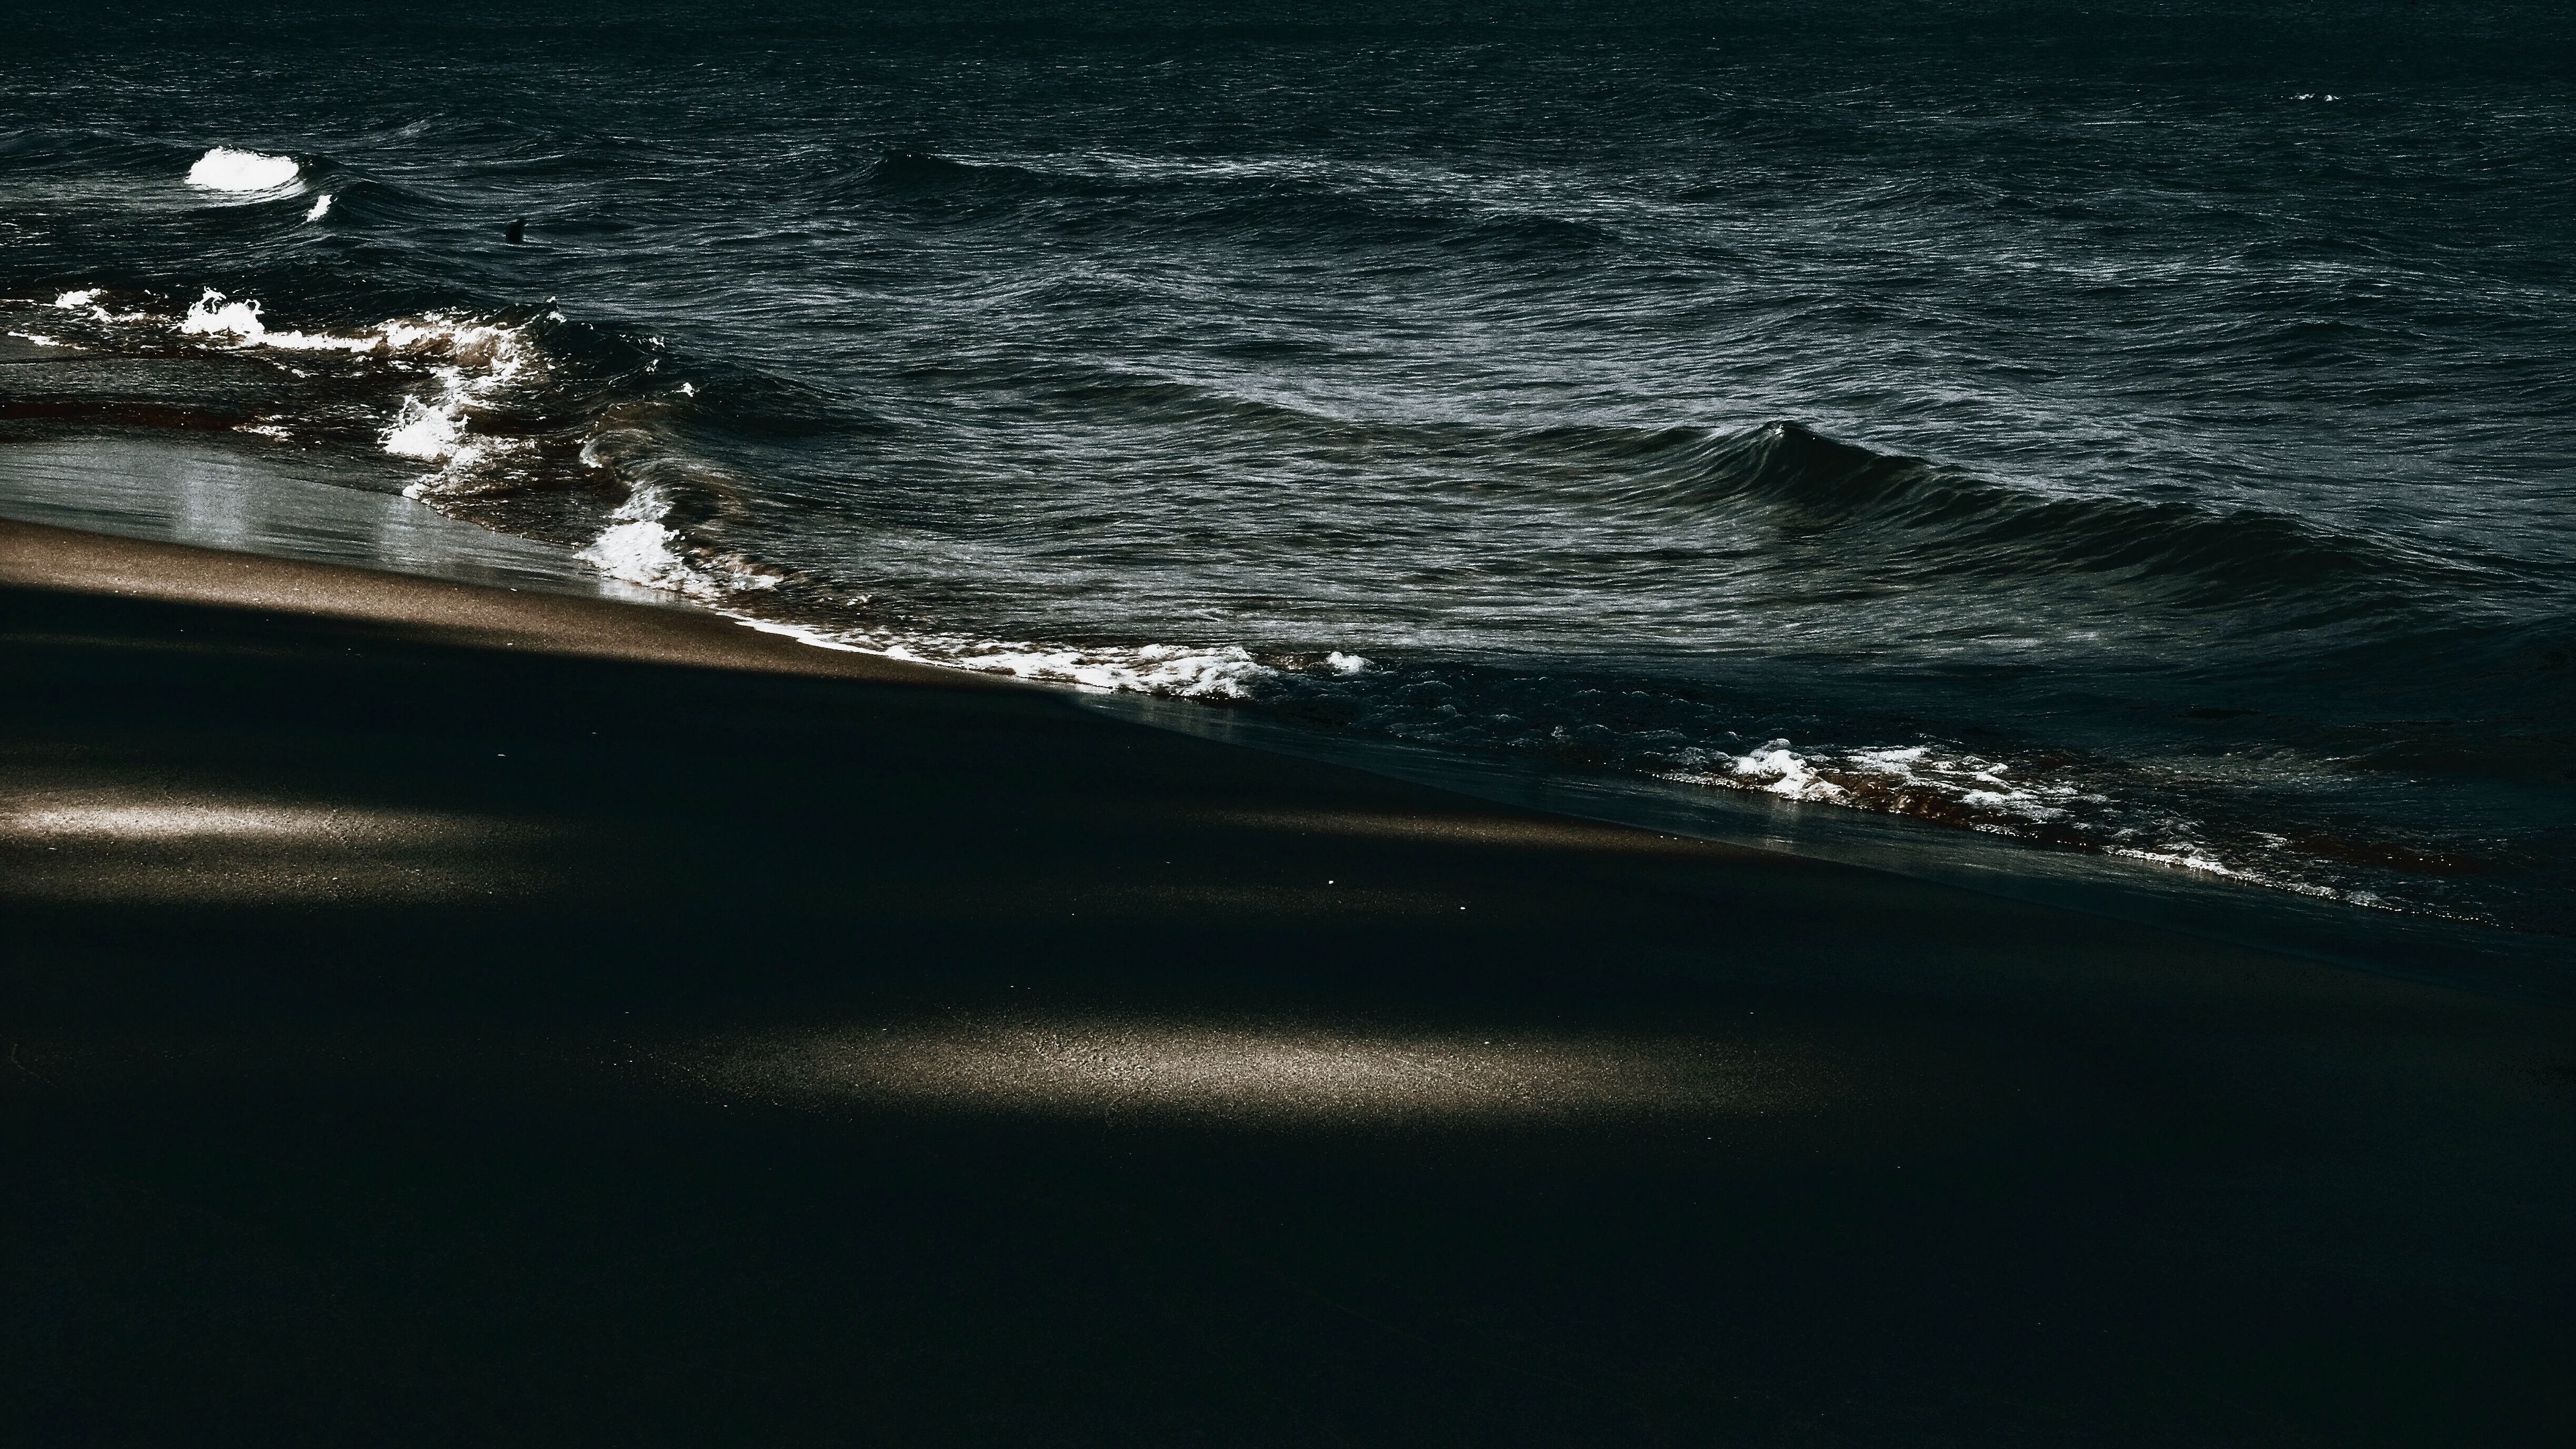 Download wallpaper 3840x2160 beach, sea, waves, landscape, dark 4k uhd 16:9 HD background